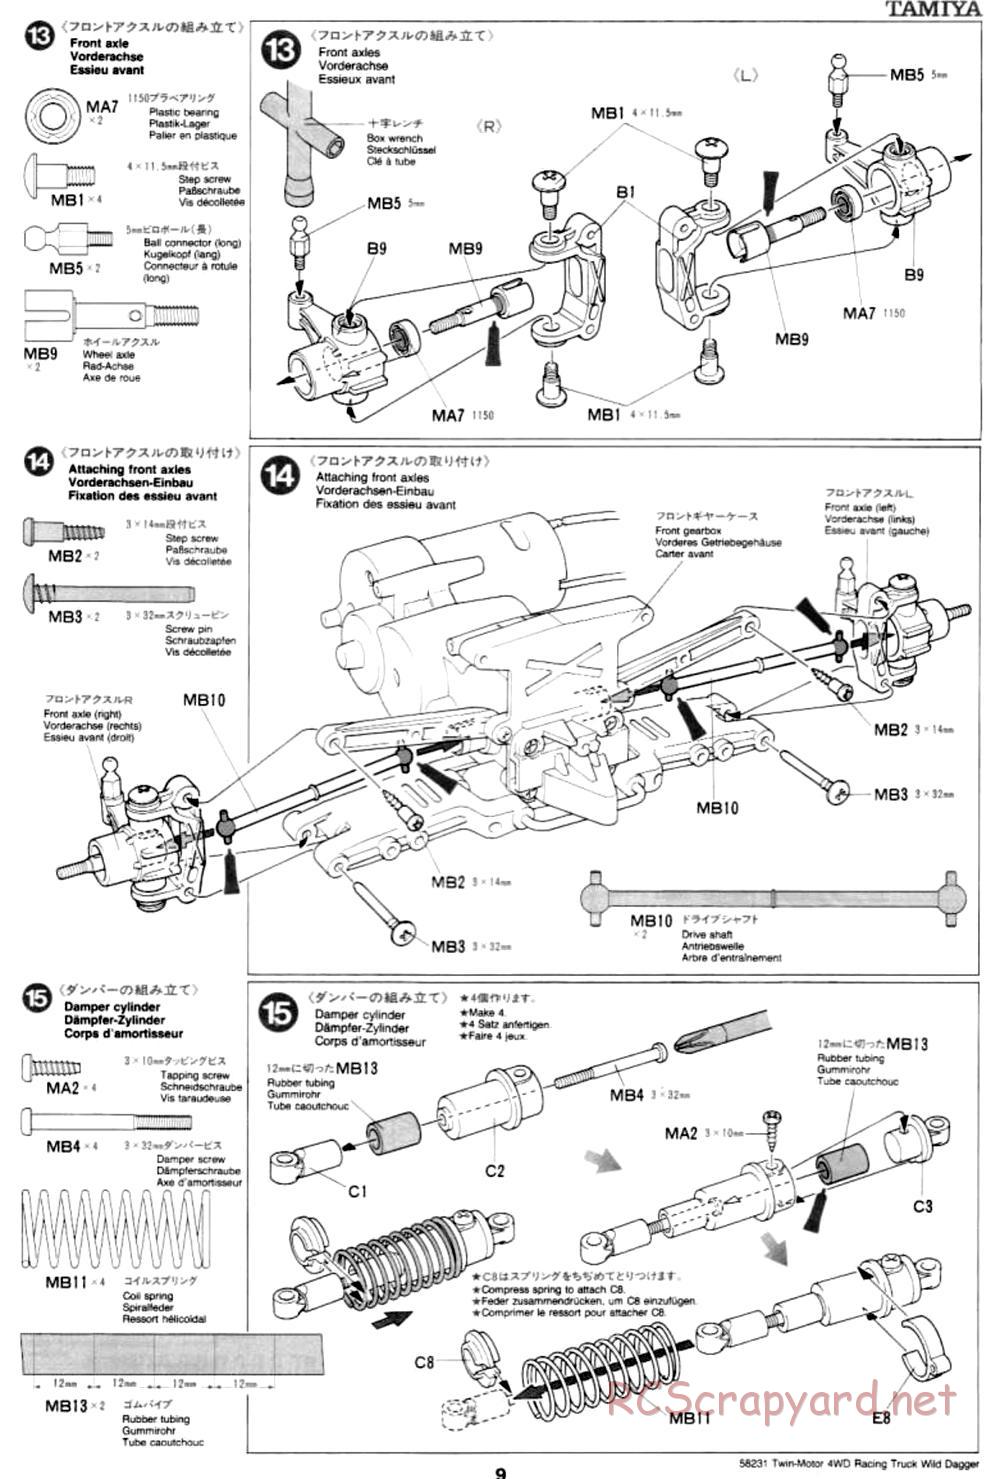 Tamiya - Wild Dagger - WR-01 Chassis - Manual - Page 9